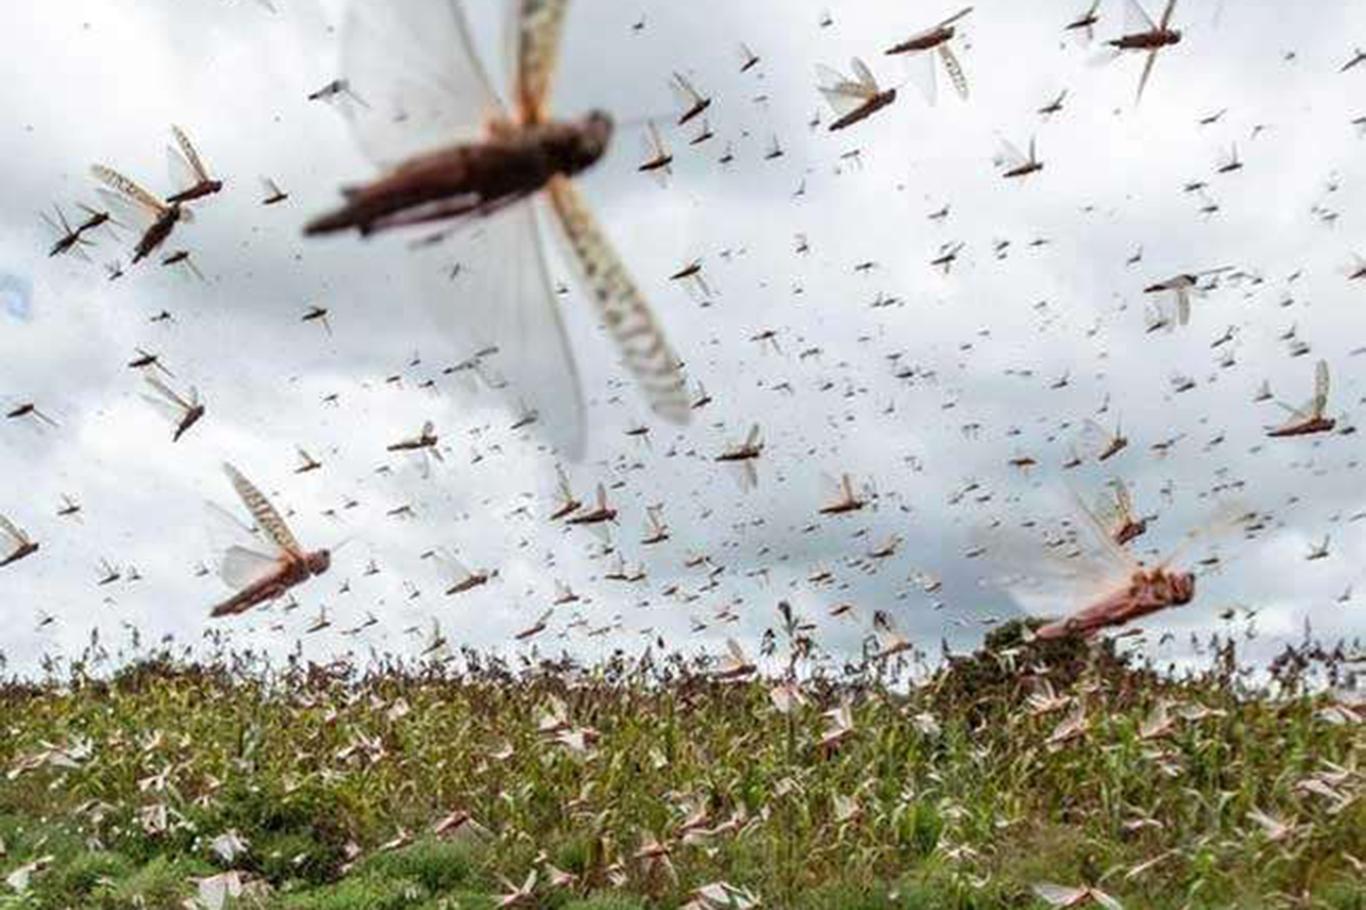 An invasion of locusts has spread across Pakistan